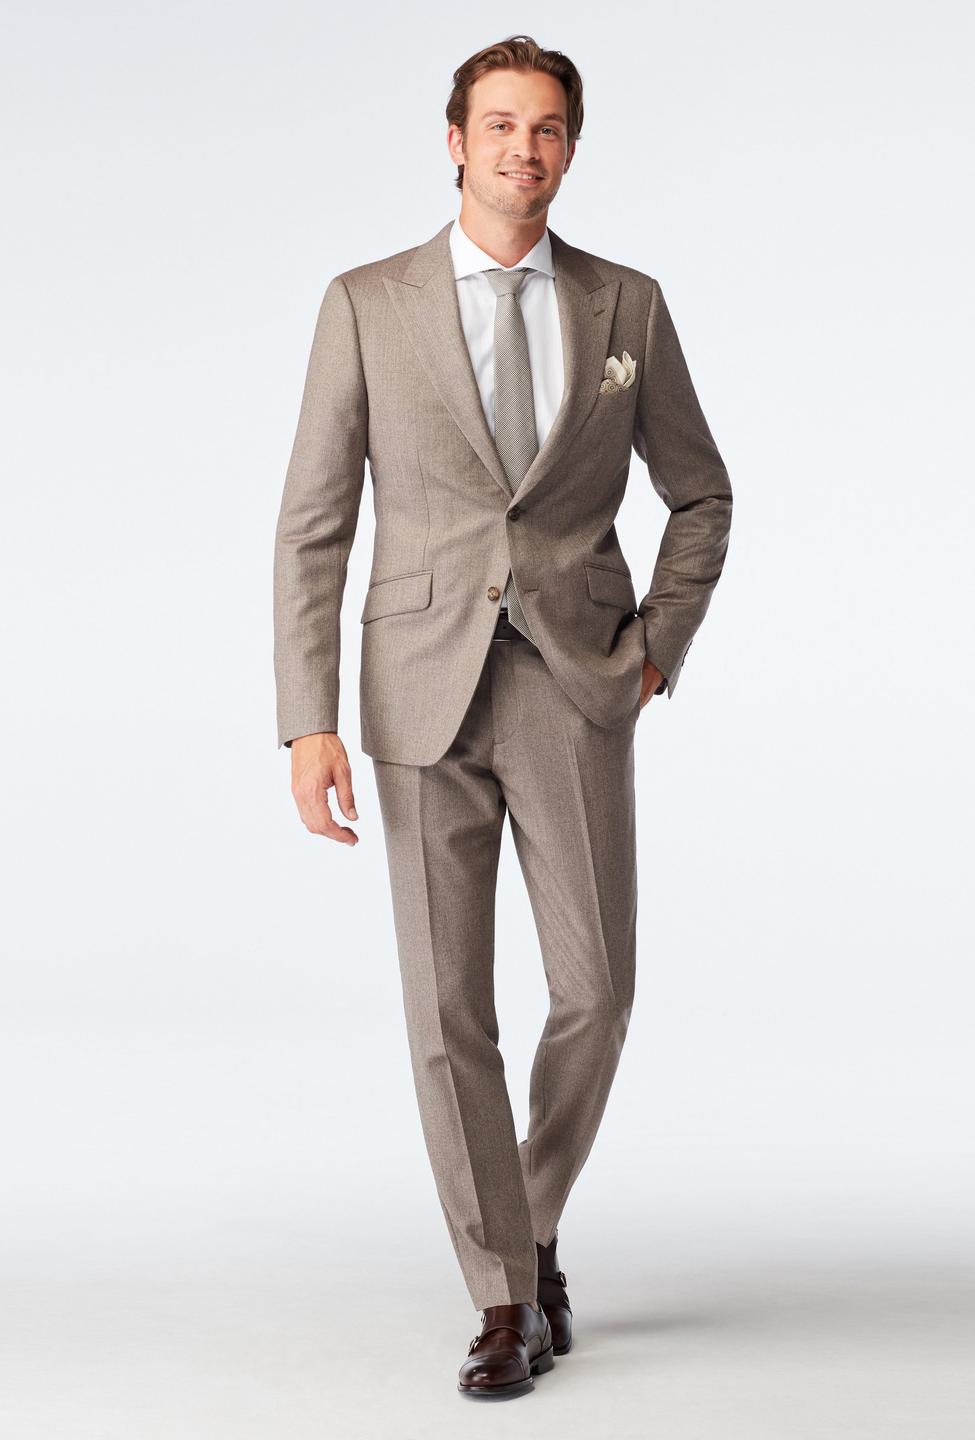 Prescot Herringbone Light Brown Suit (CAD)